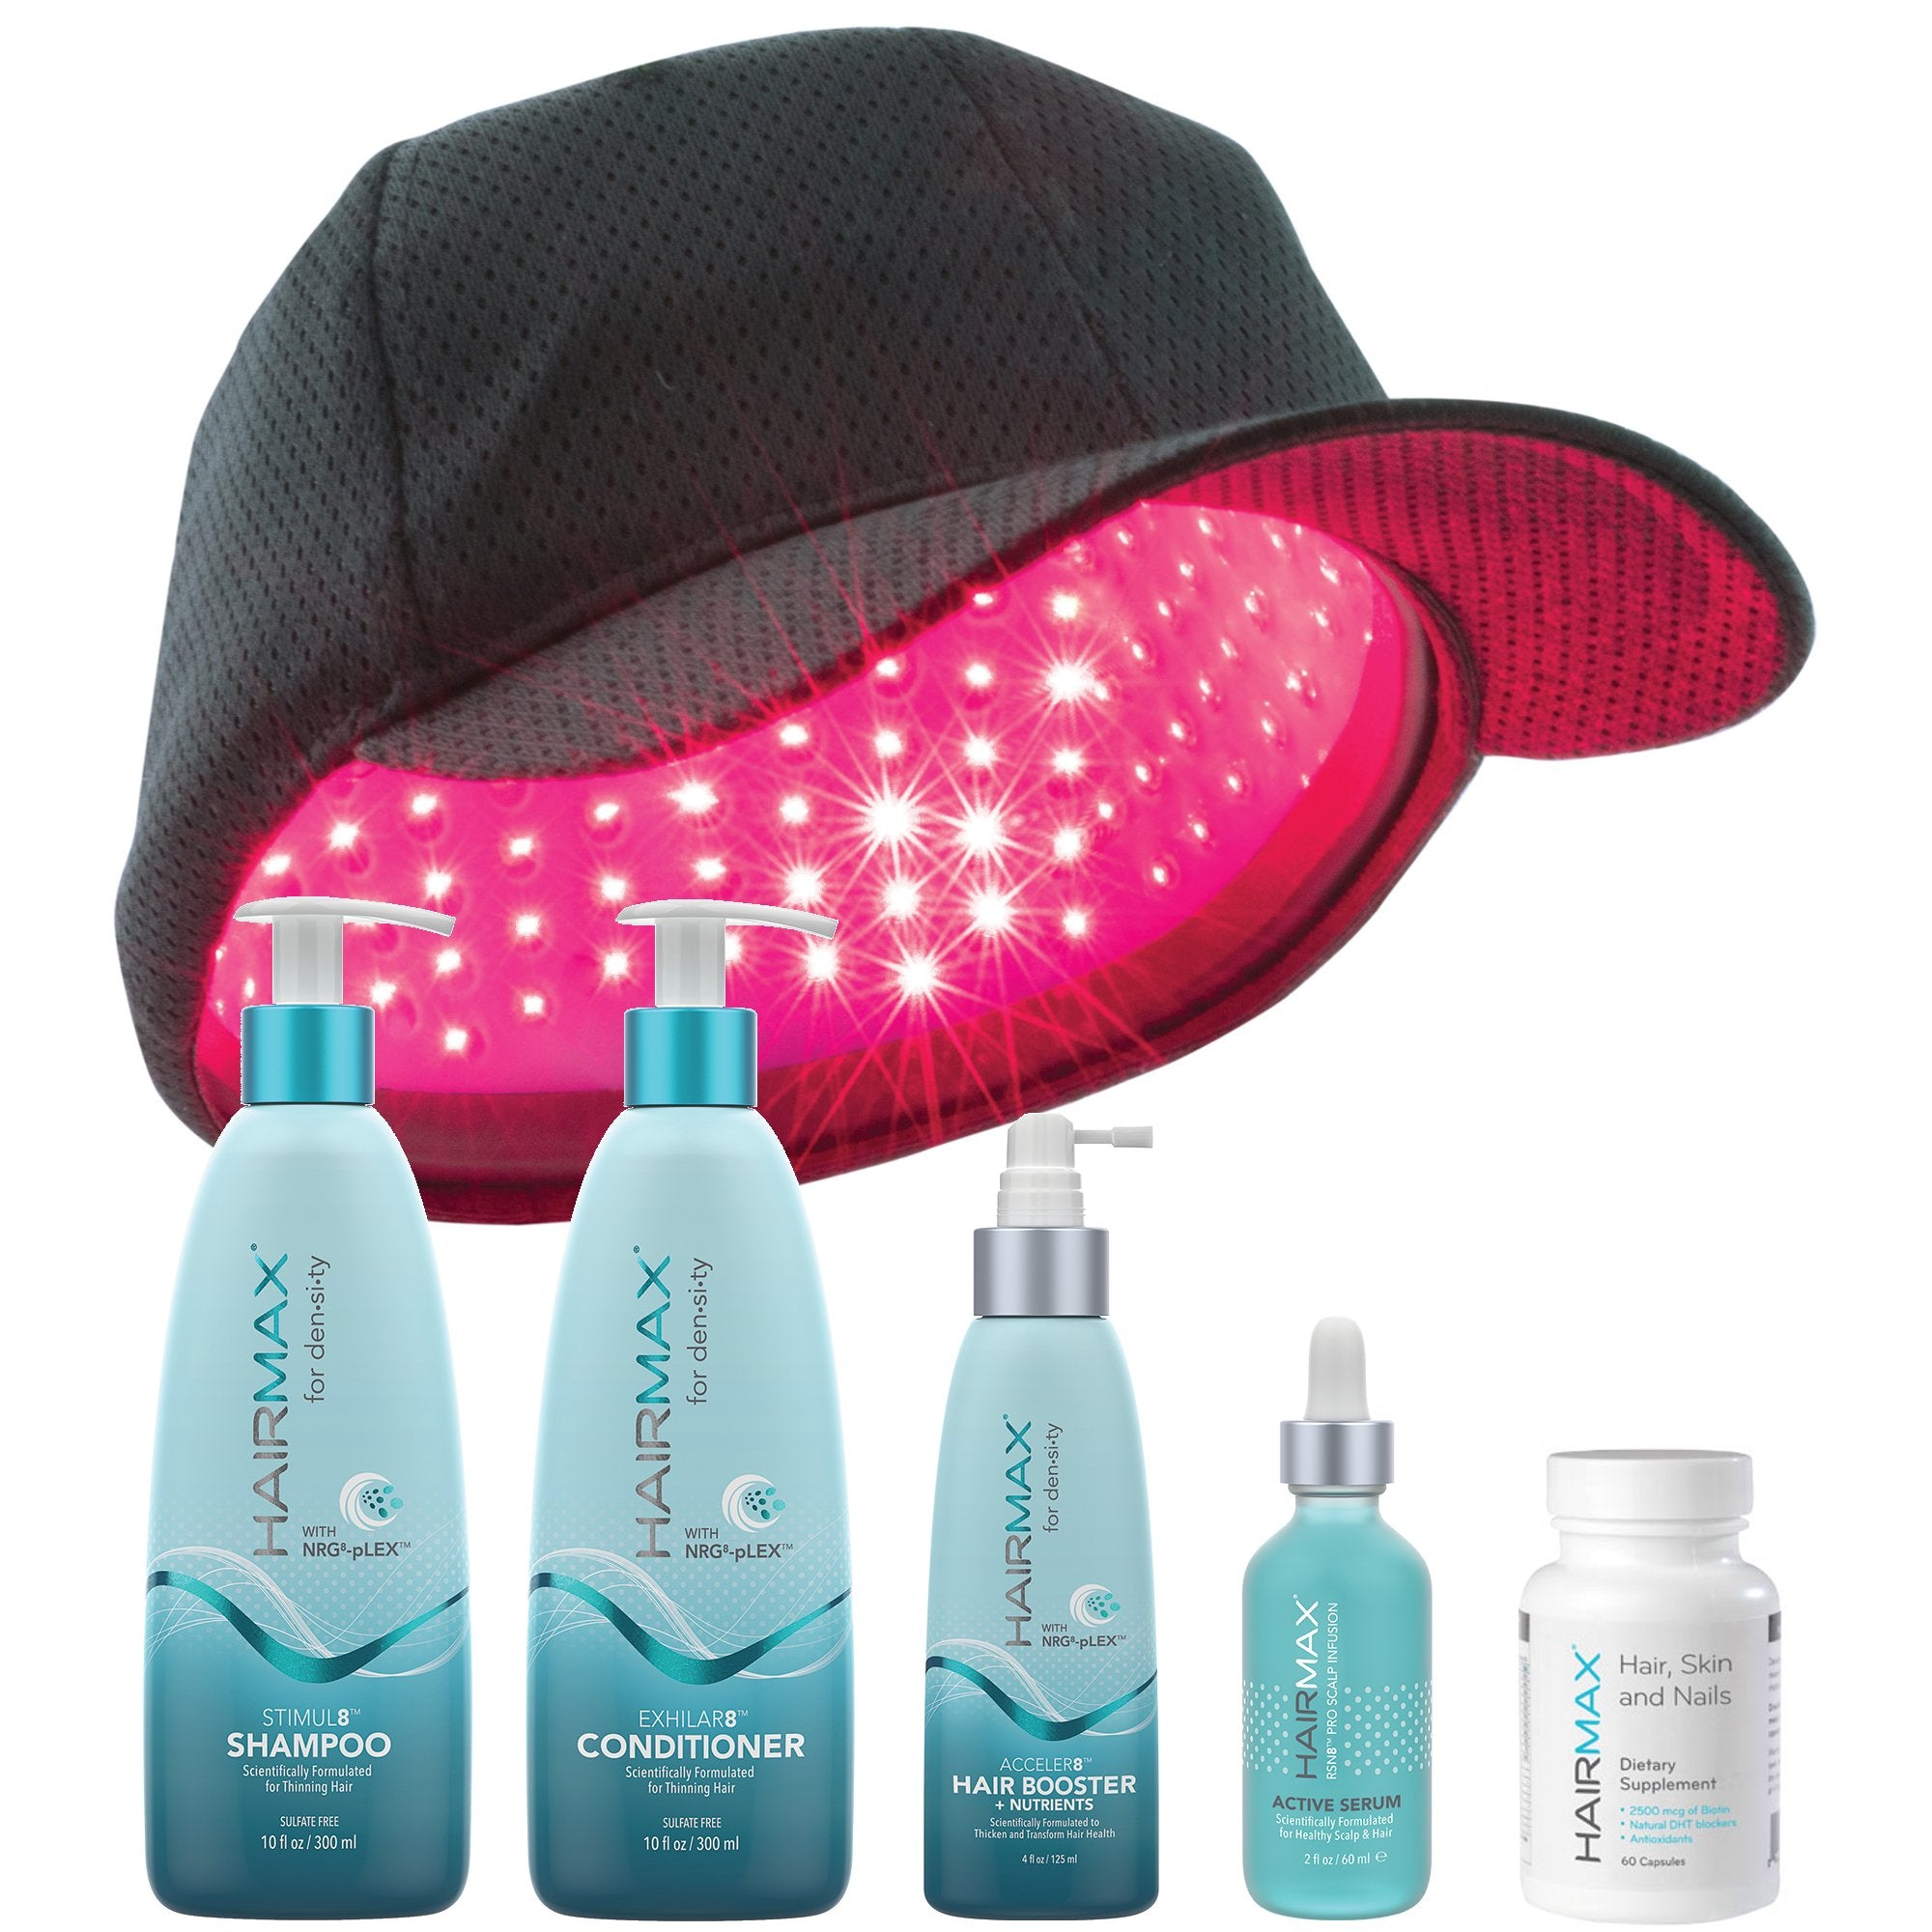 HAIRMAX LASER 272 POWERFLEX CAP & FREE Density Hair Care System (4-Piece) & Dietary Supplements